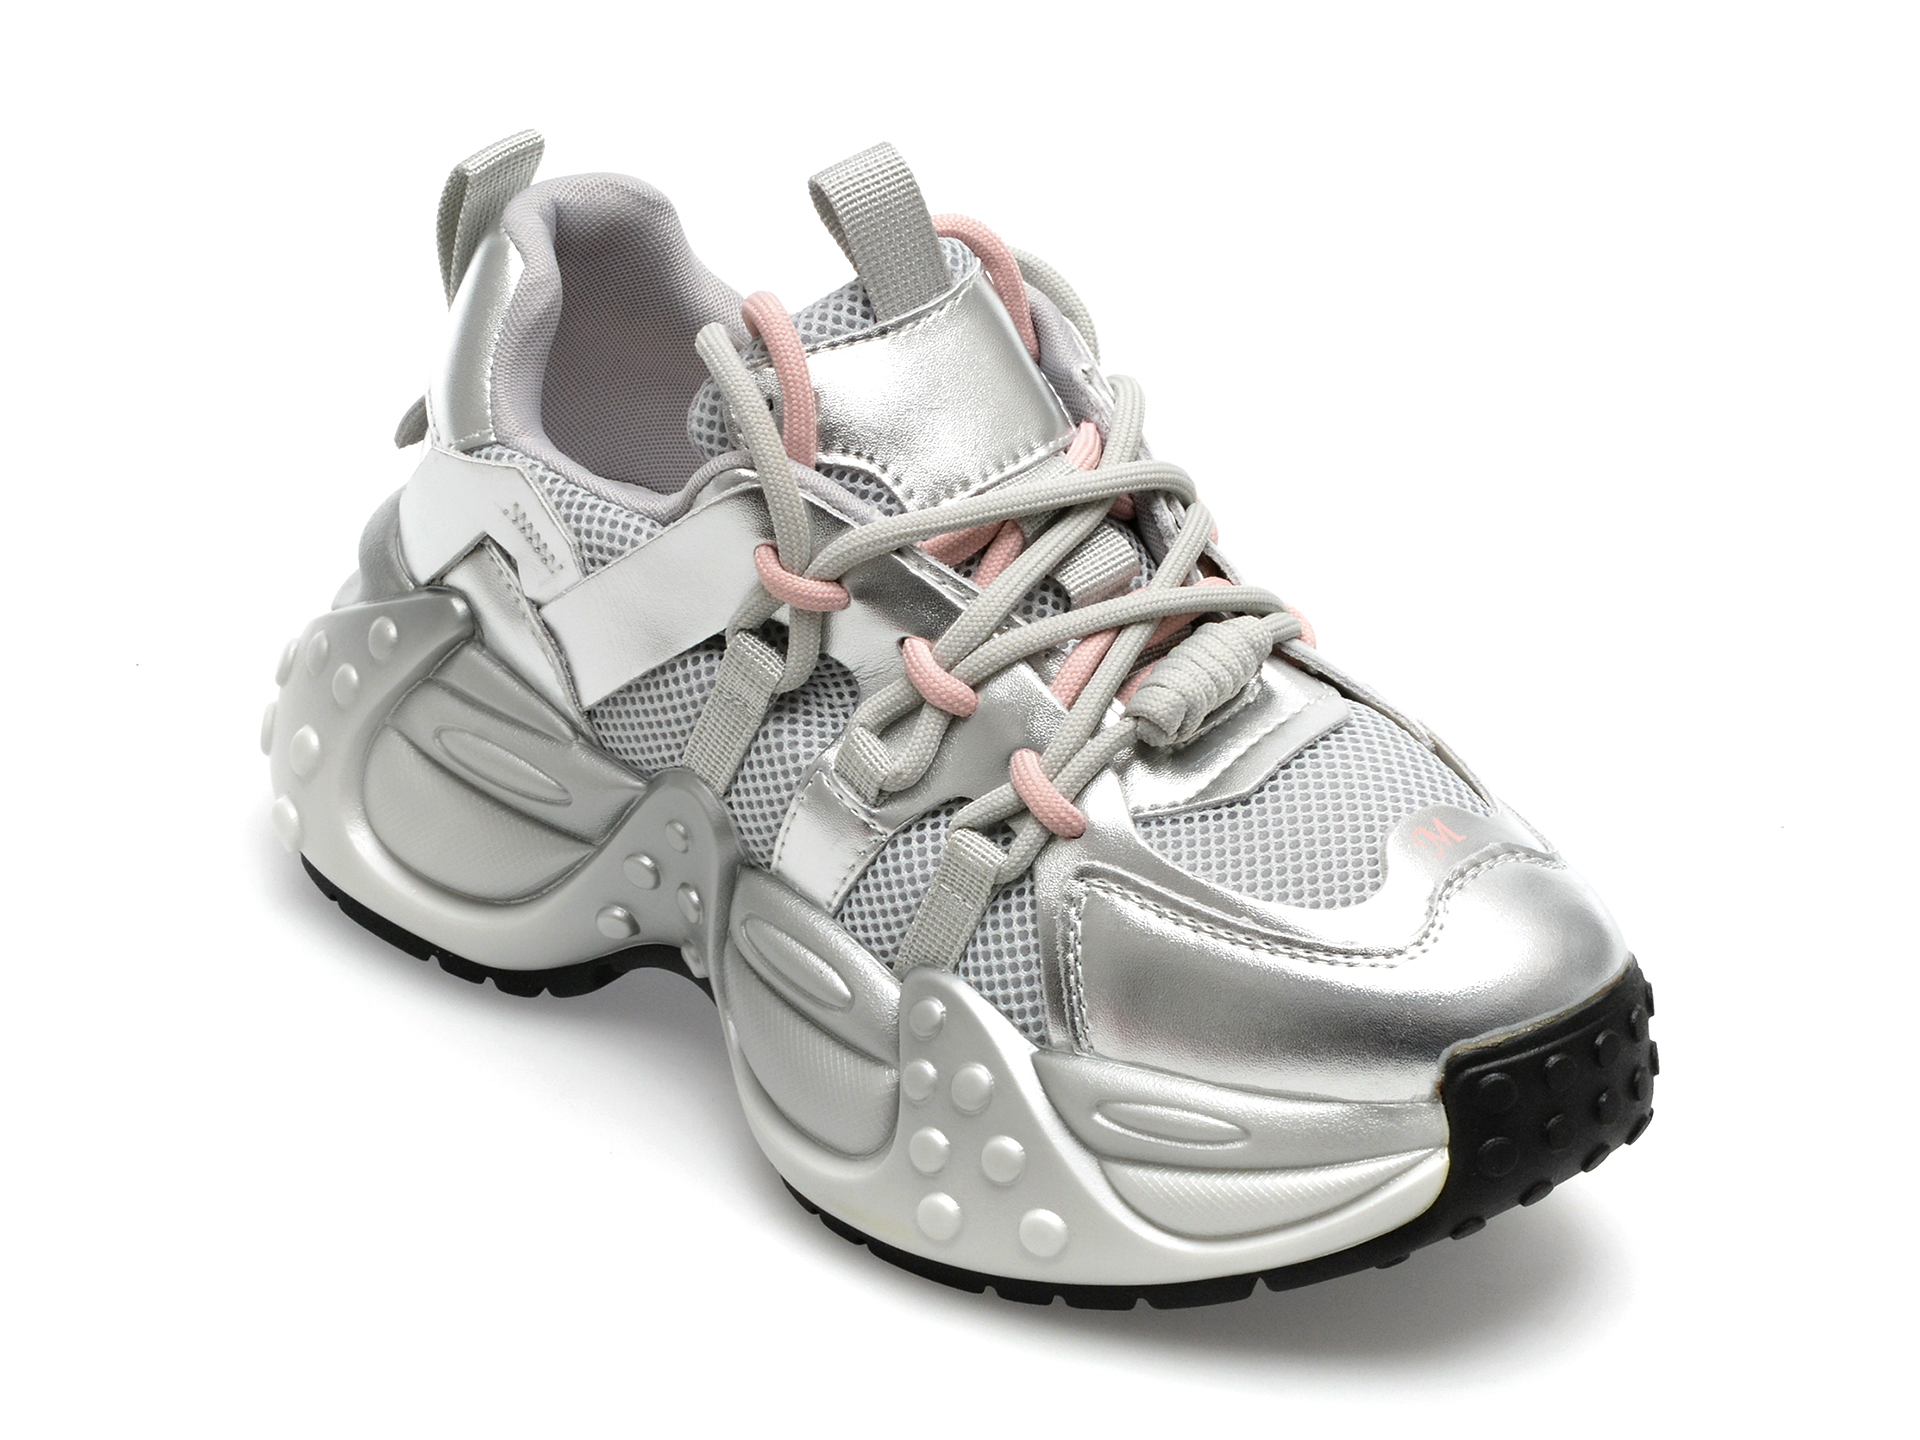 Pantofi sport EPICA argintii, 8531, din material textil si piele naturala